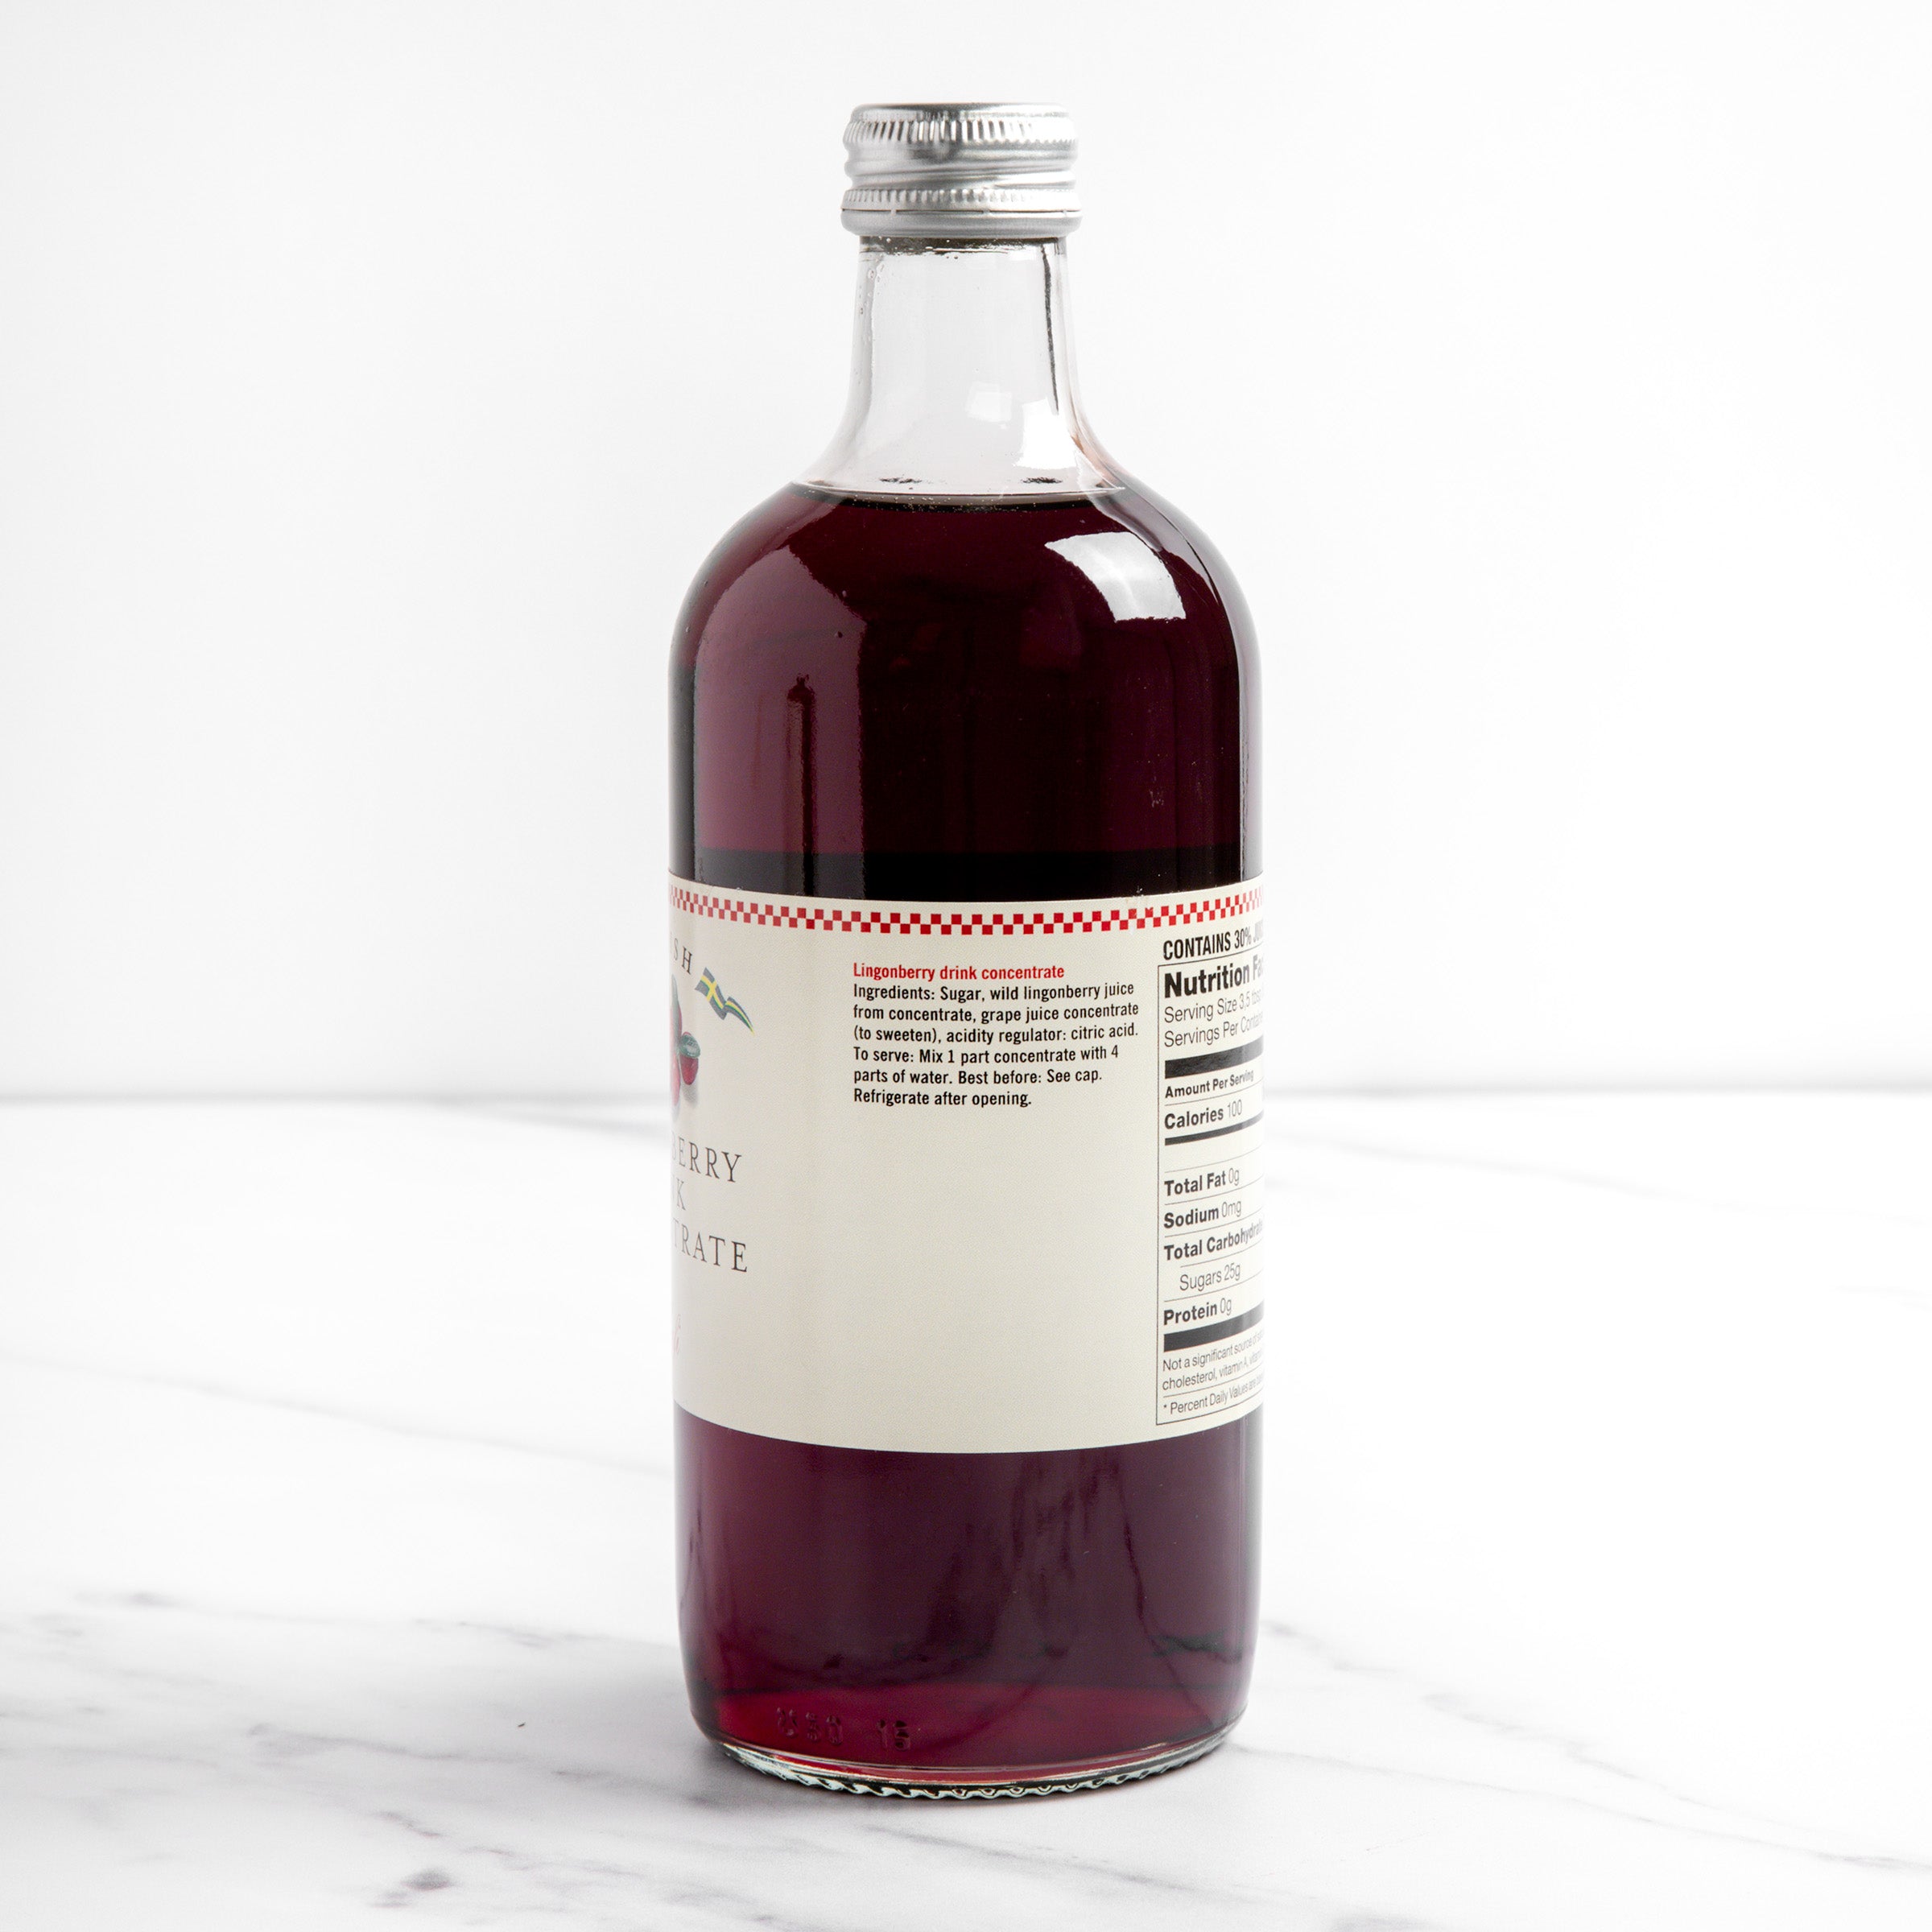 igourmet_7600_Hafi_Swedish Lingonberry Drink Concentrate_Cocktail Mixers & Tonics